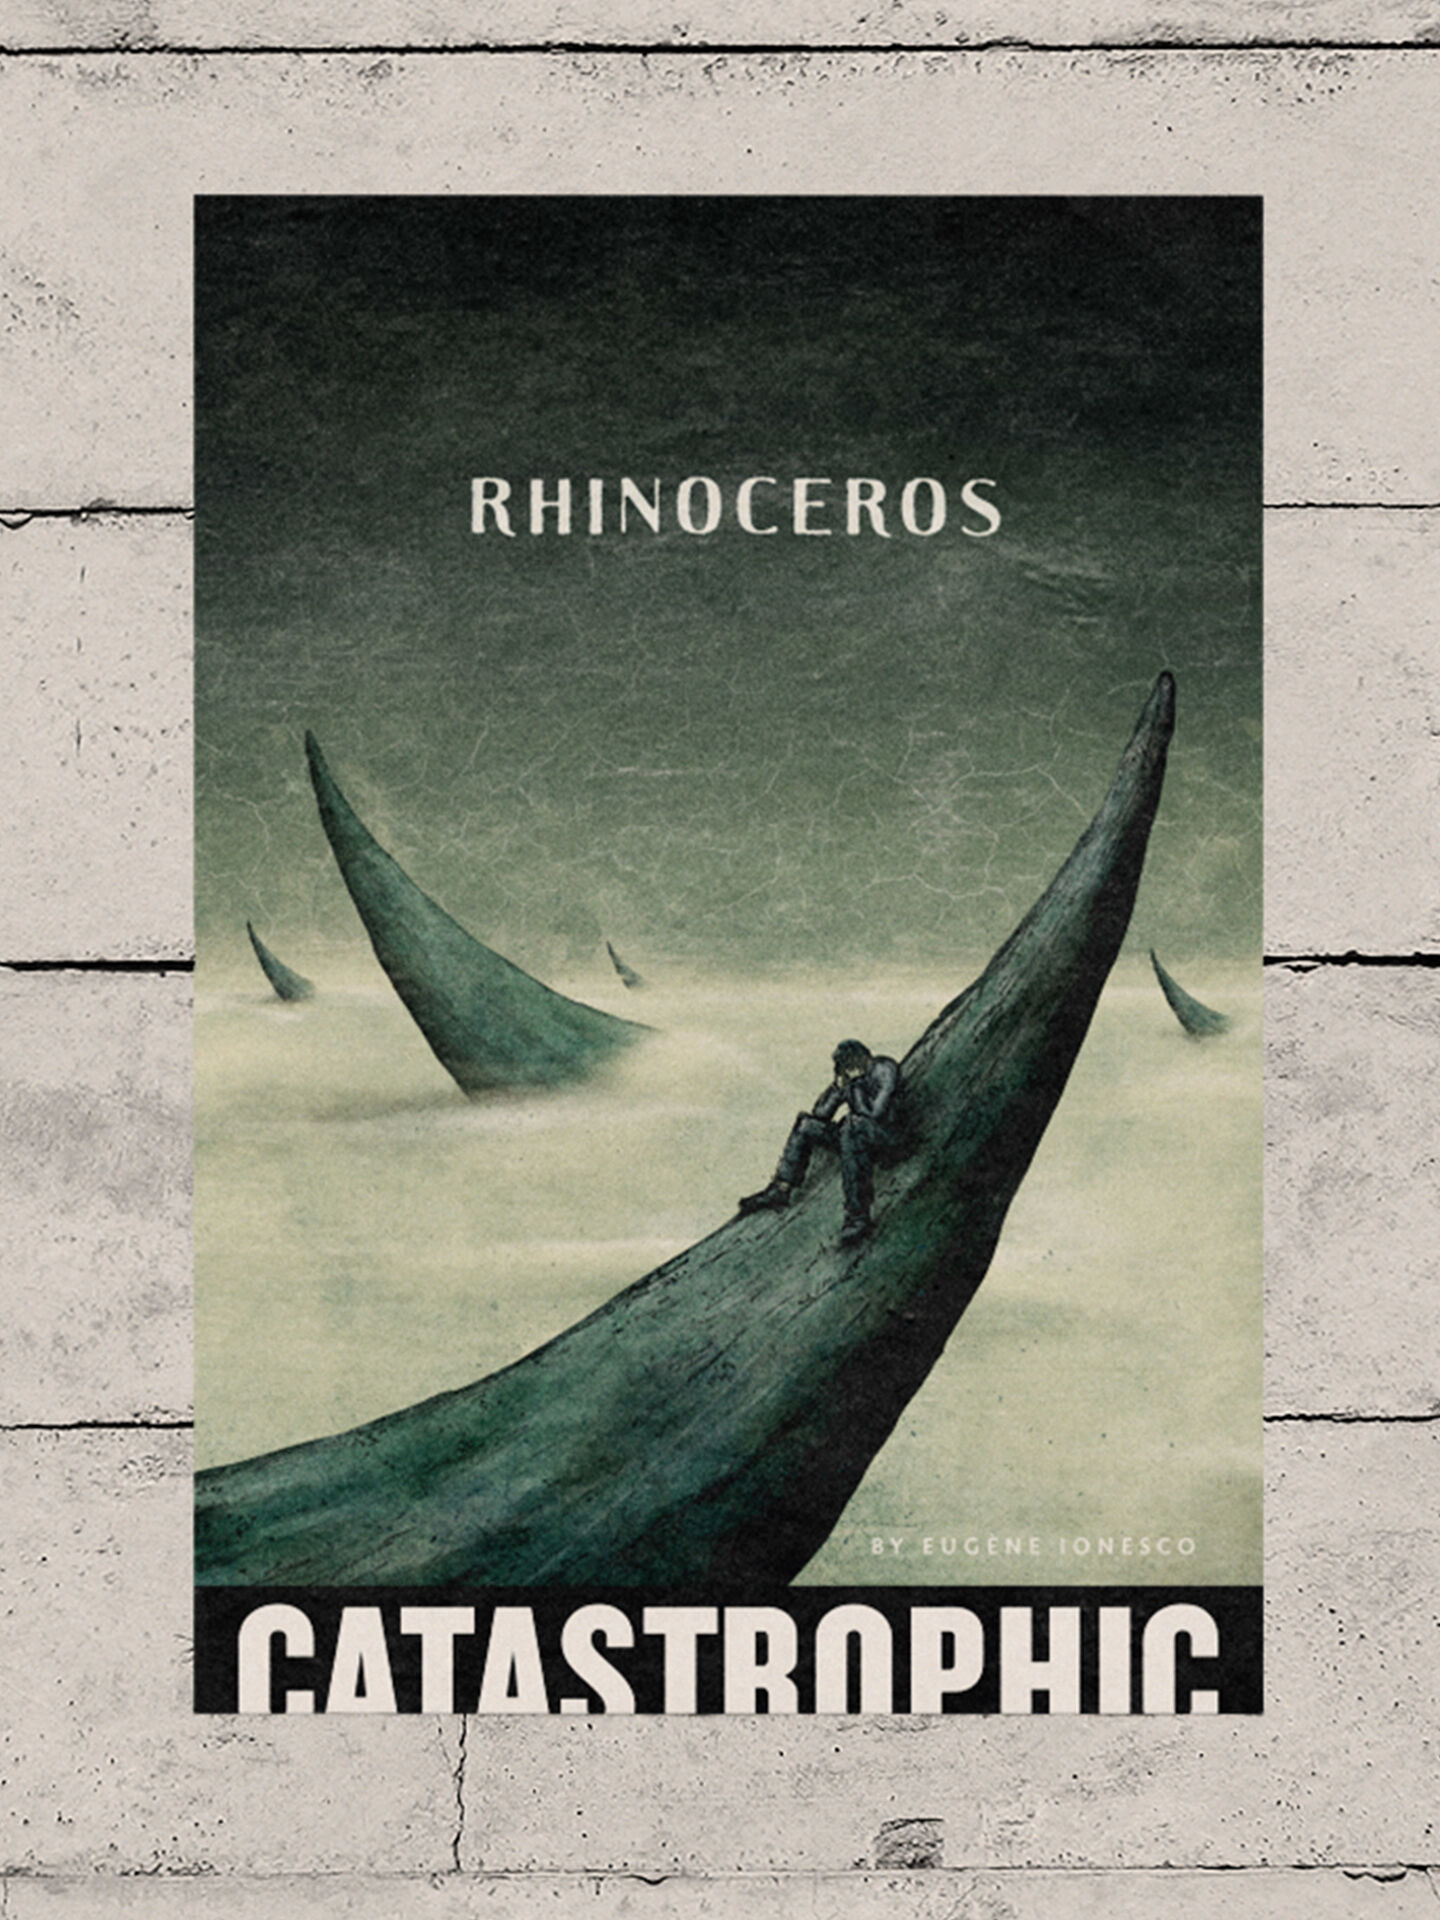 Catastrophic poster 04 rhino